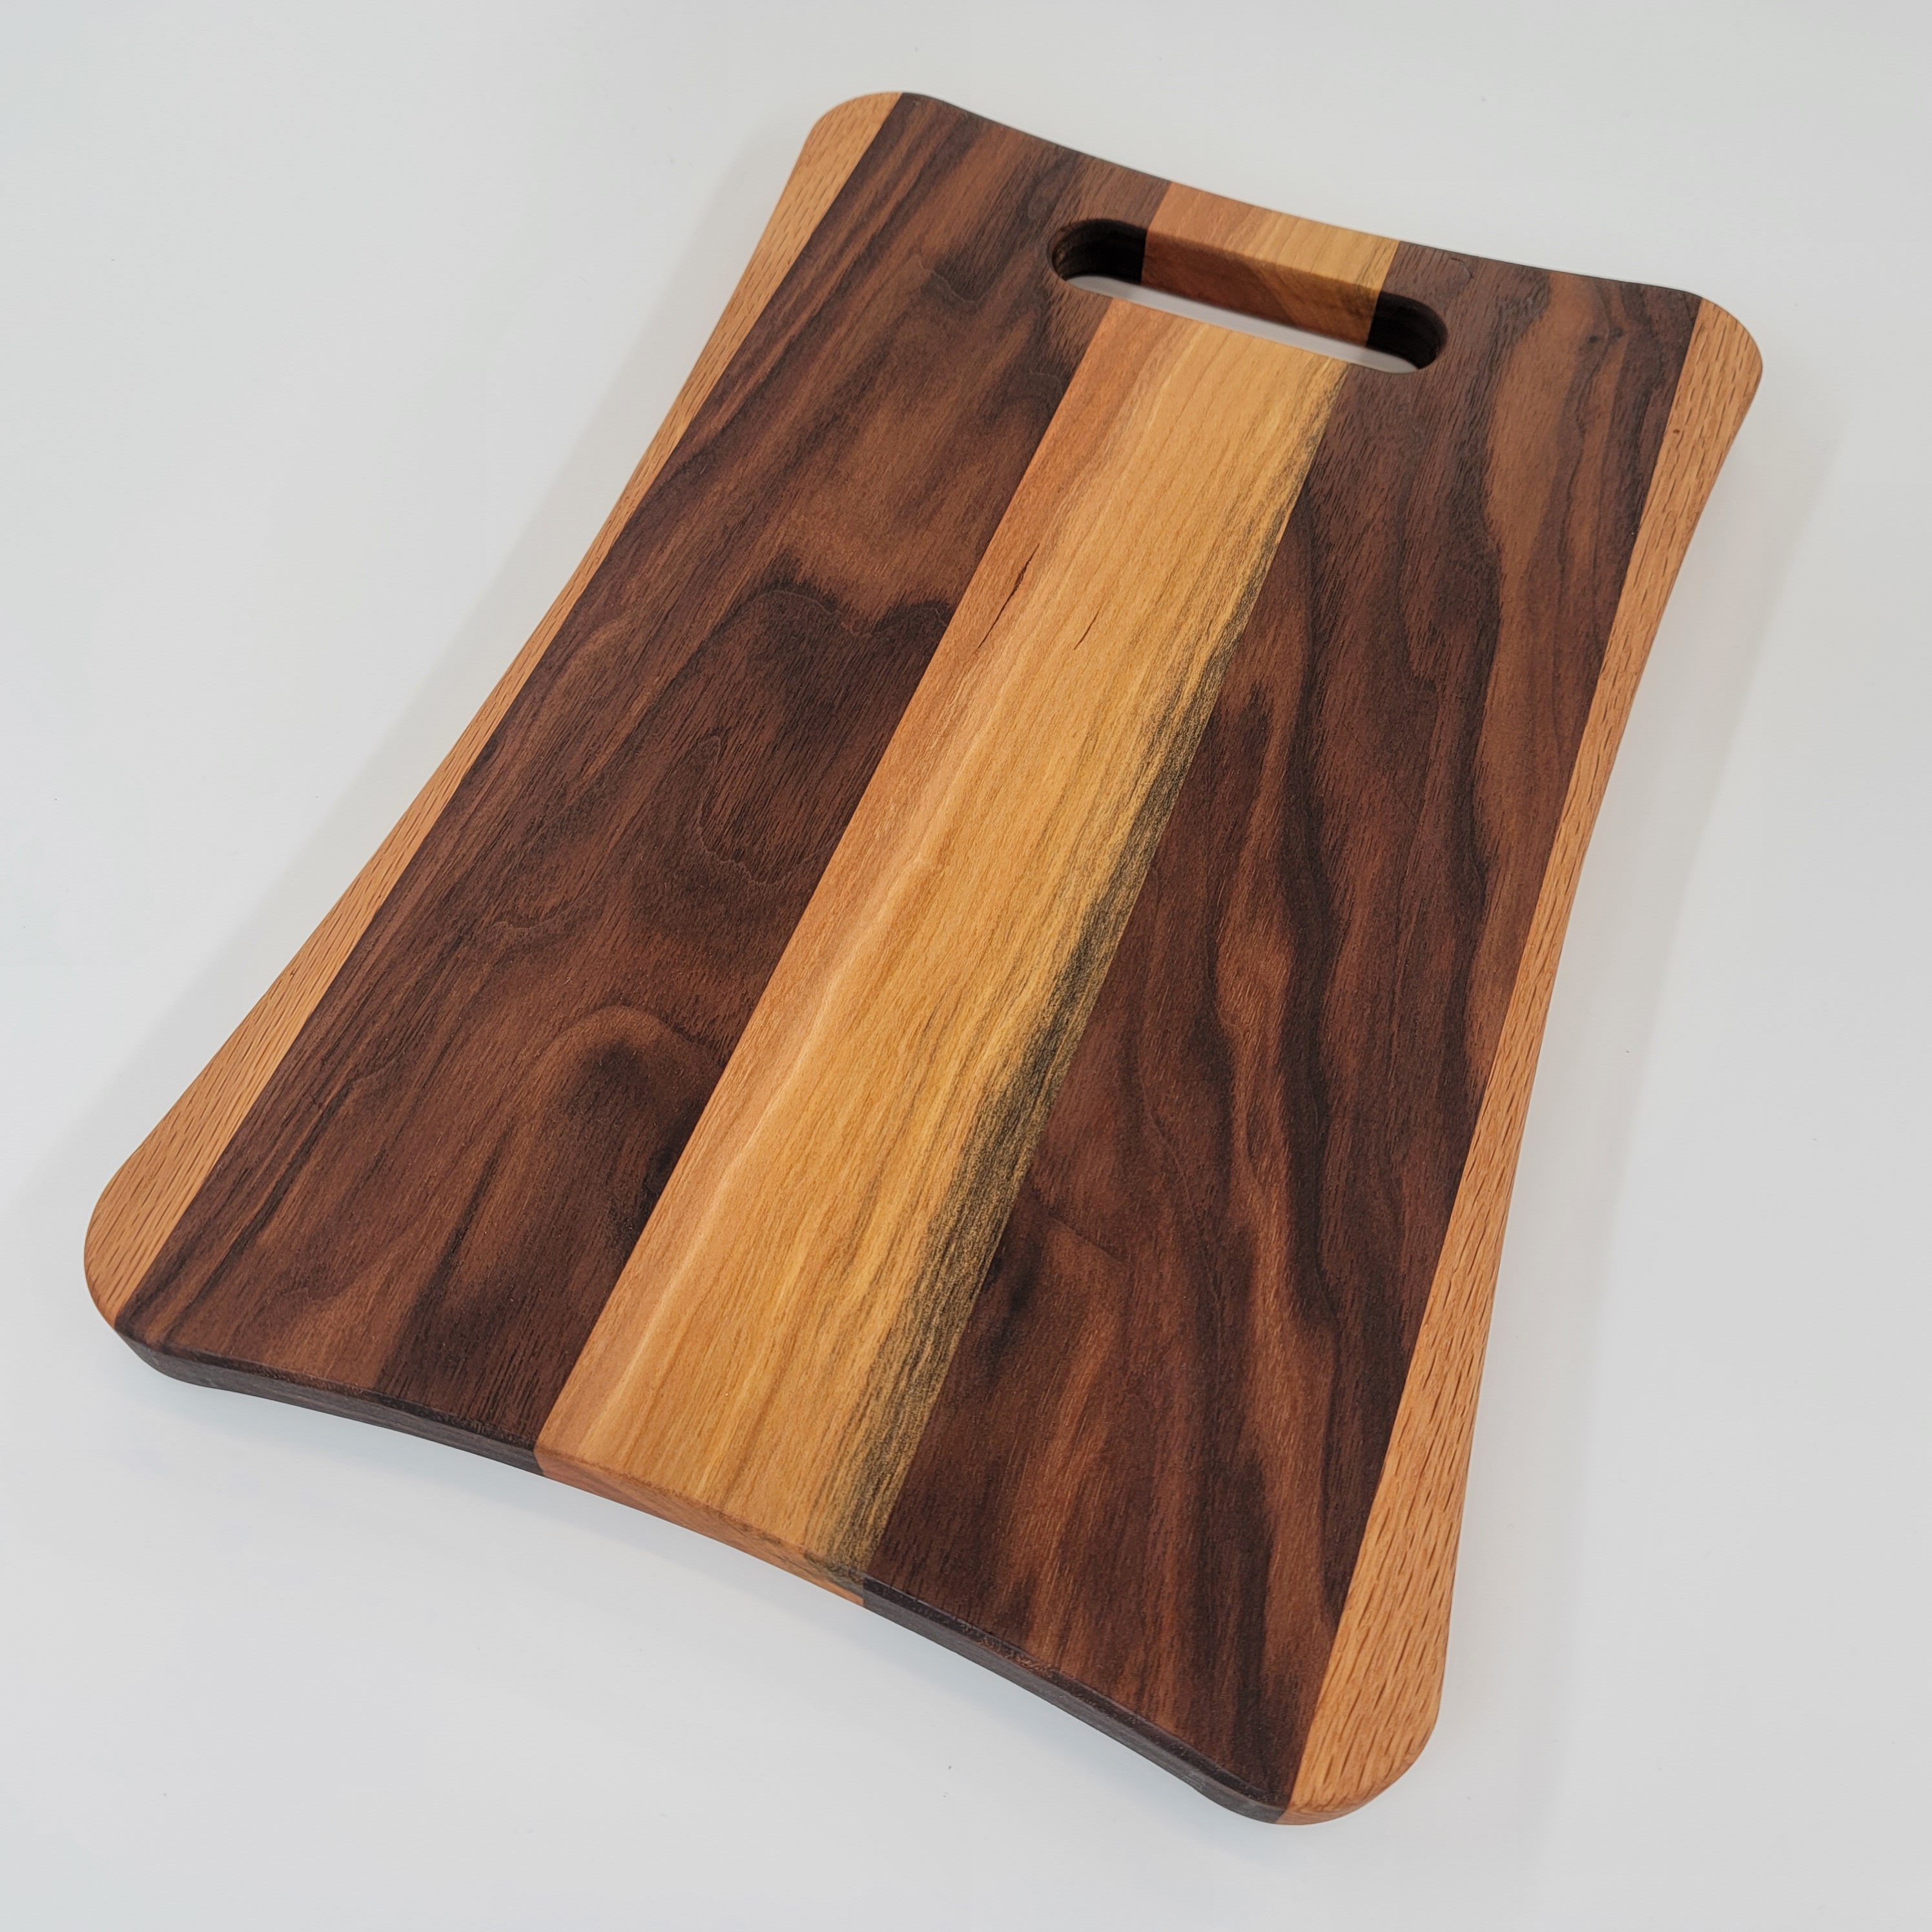 Handmade Walnut Wood Clipboard with Adjustable Base Set - Durable